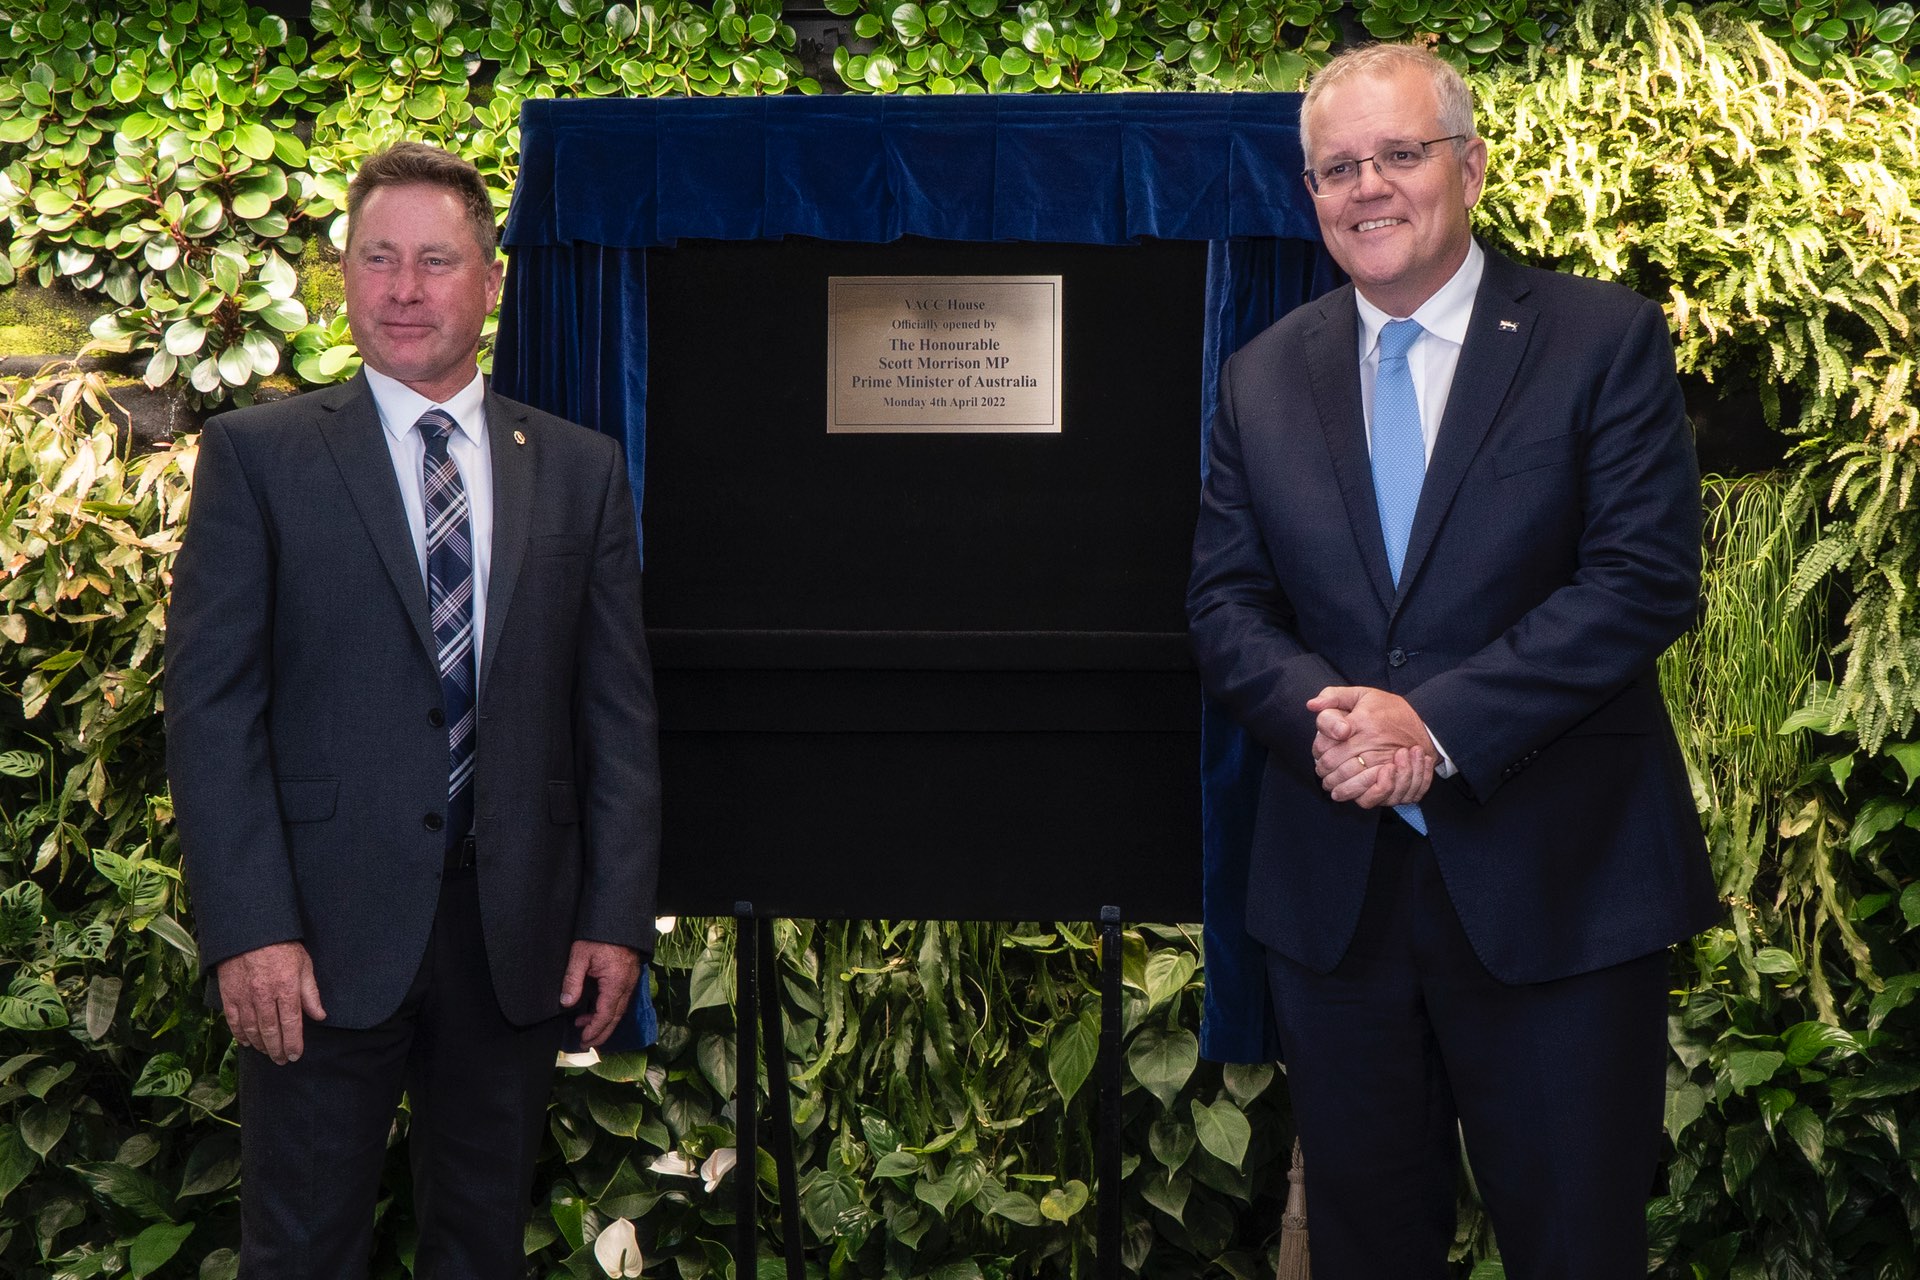 Prime Minister Opens New VACC House-Mark Awramenko with Scott Morrison